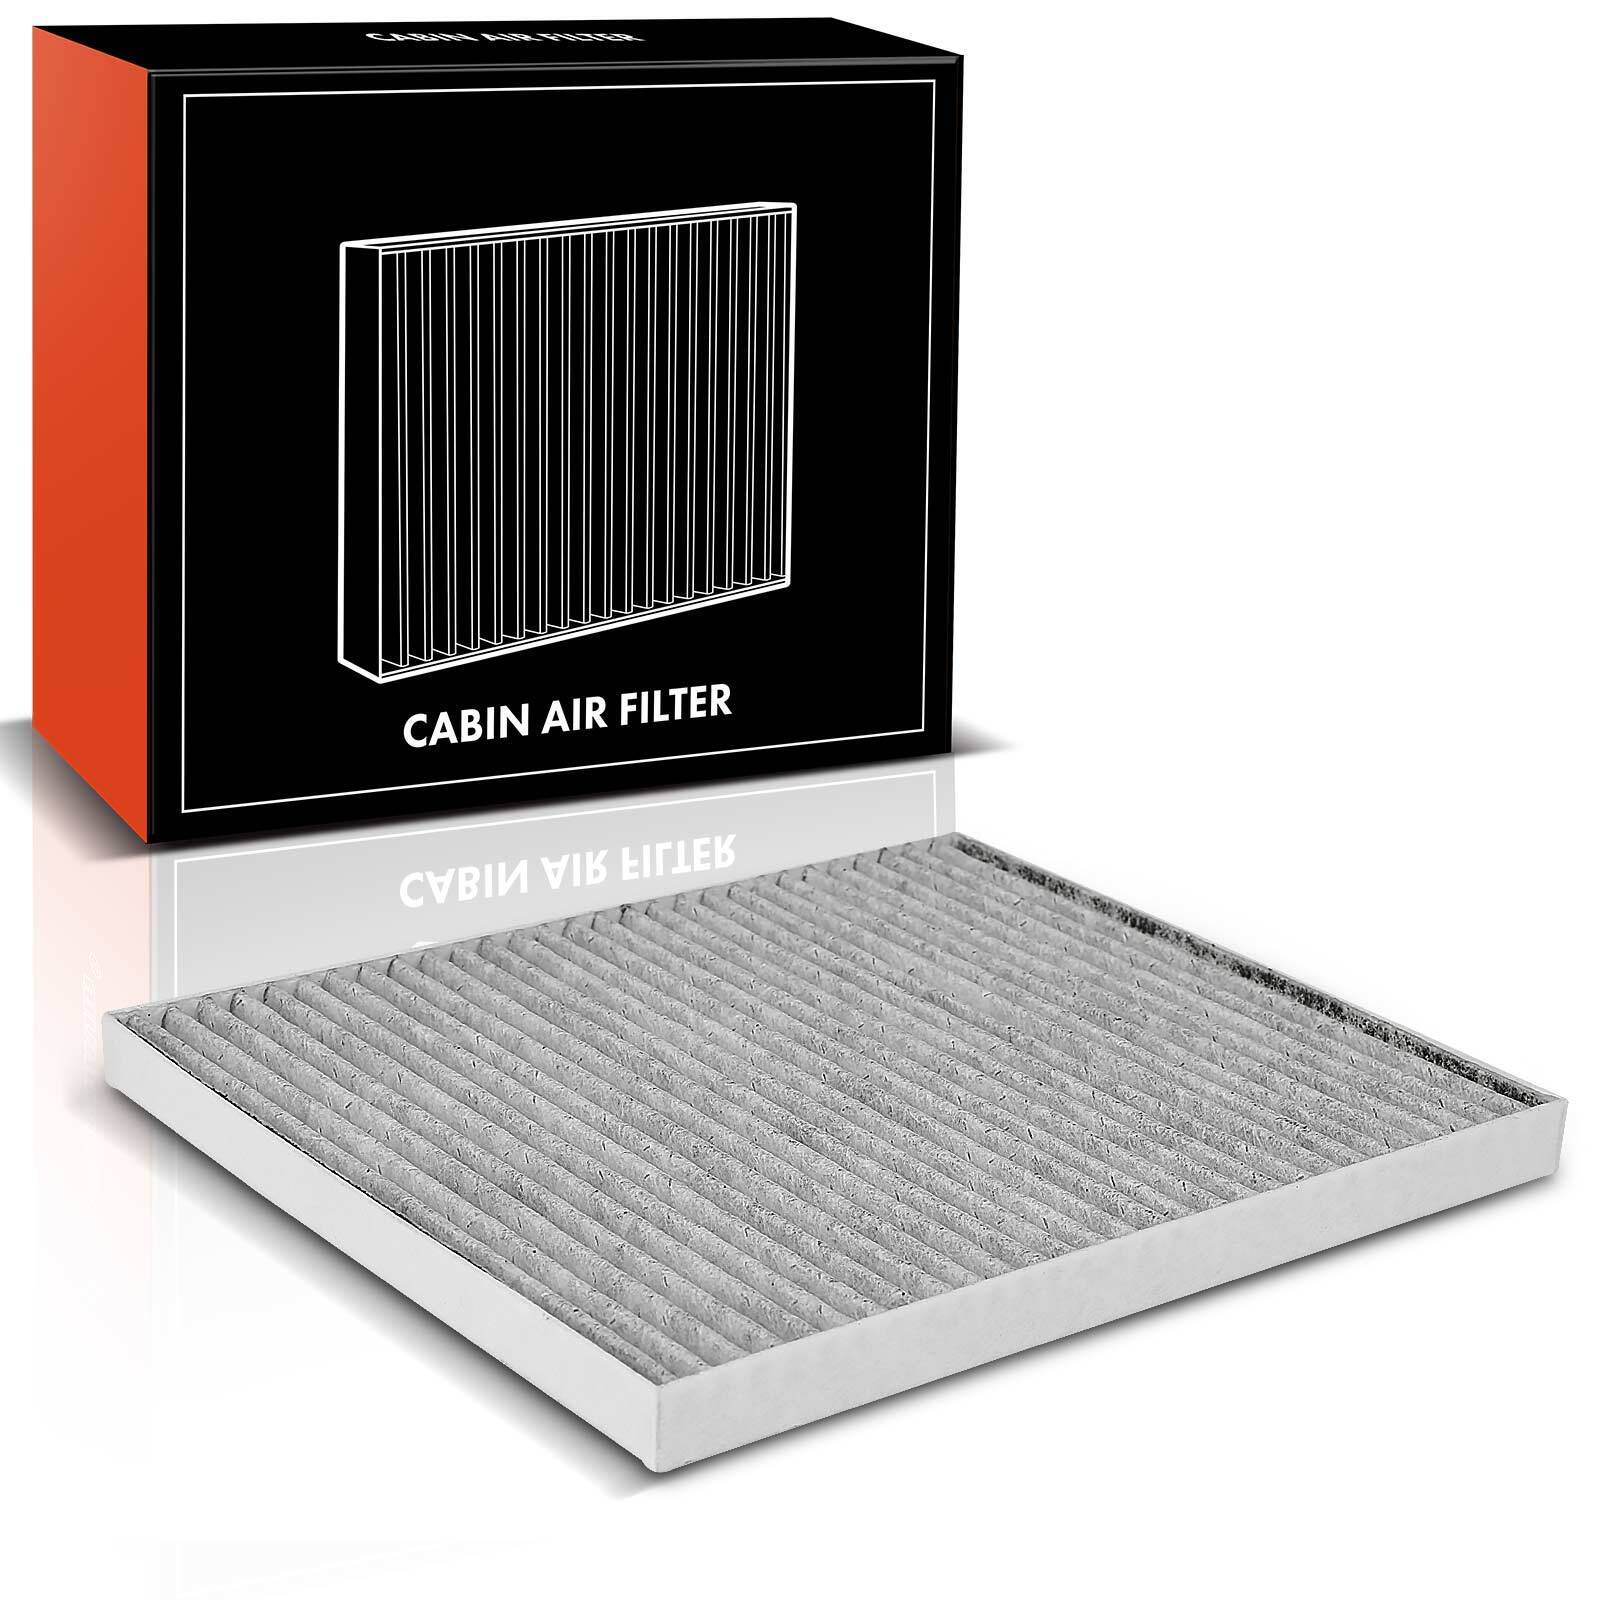 Activated Carbon Cabin Air Filter for Kia Borrego 2009-2011 Spectra5 2005-2009